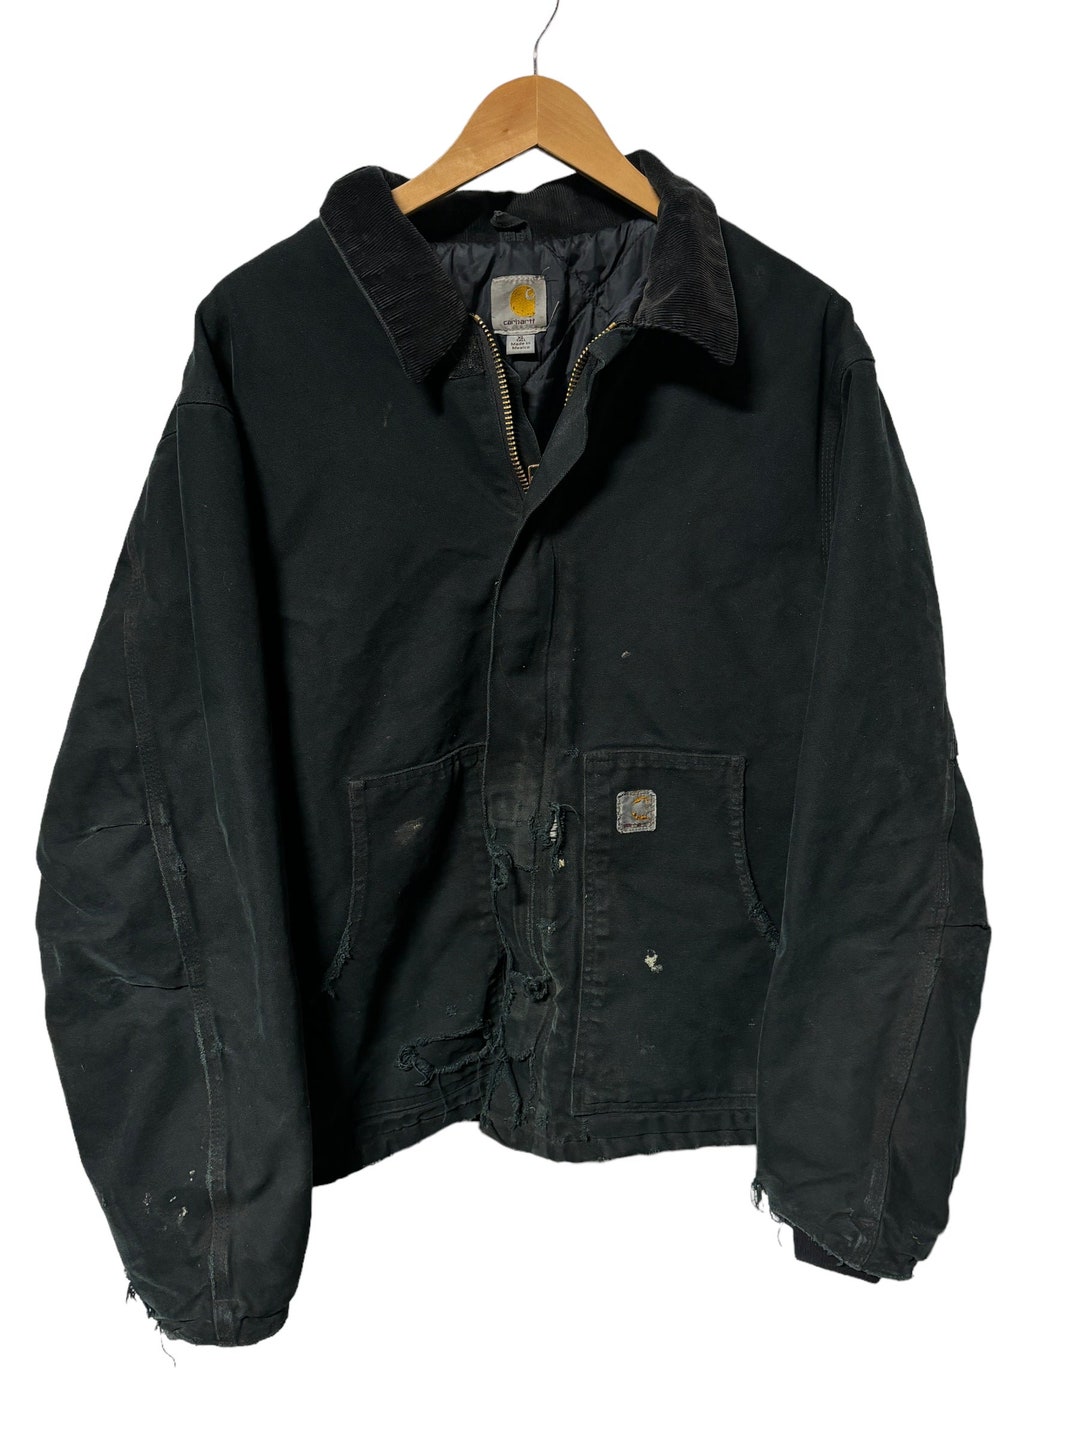 Vintage Carhartt J002 BLK Distressed Zip up Work Jacket Size XL Tall - Etsy